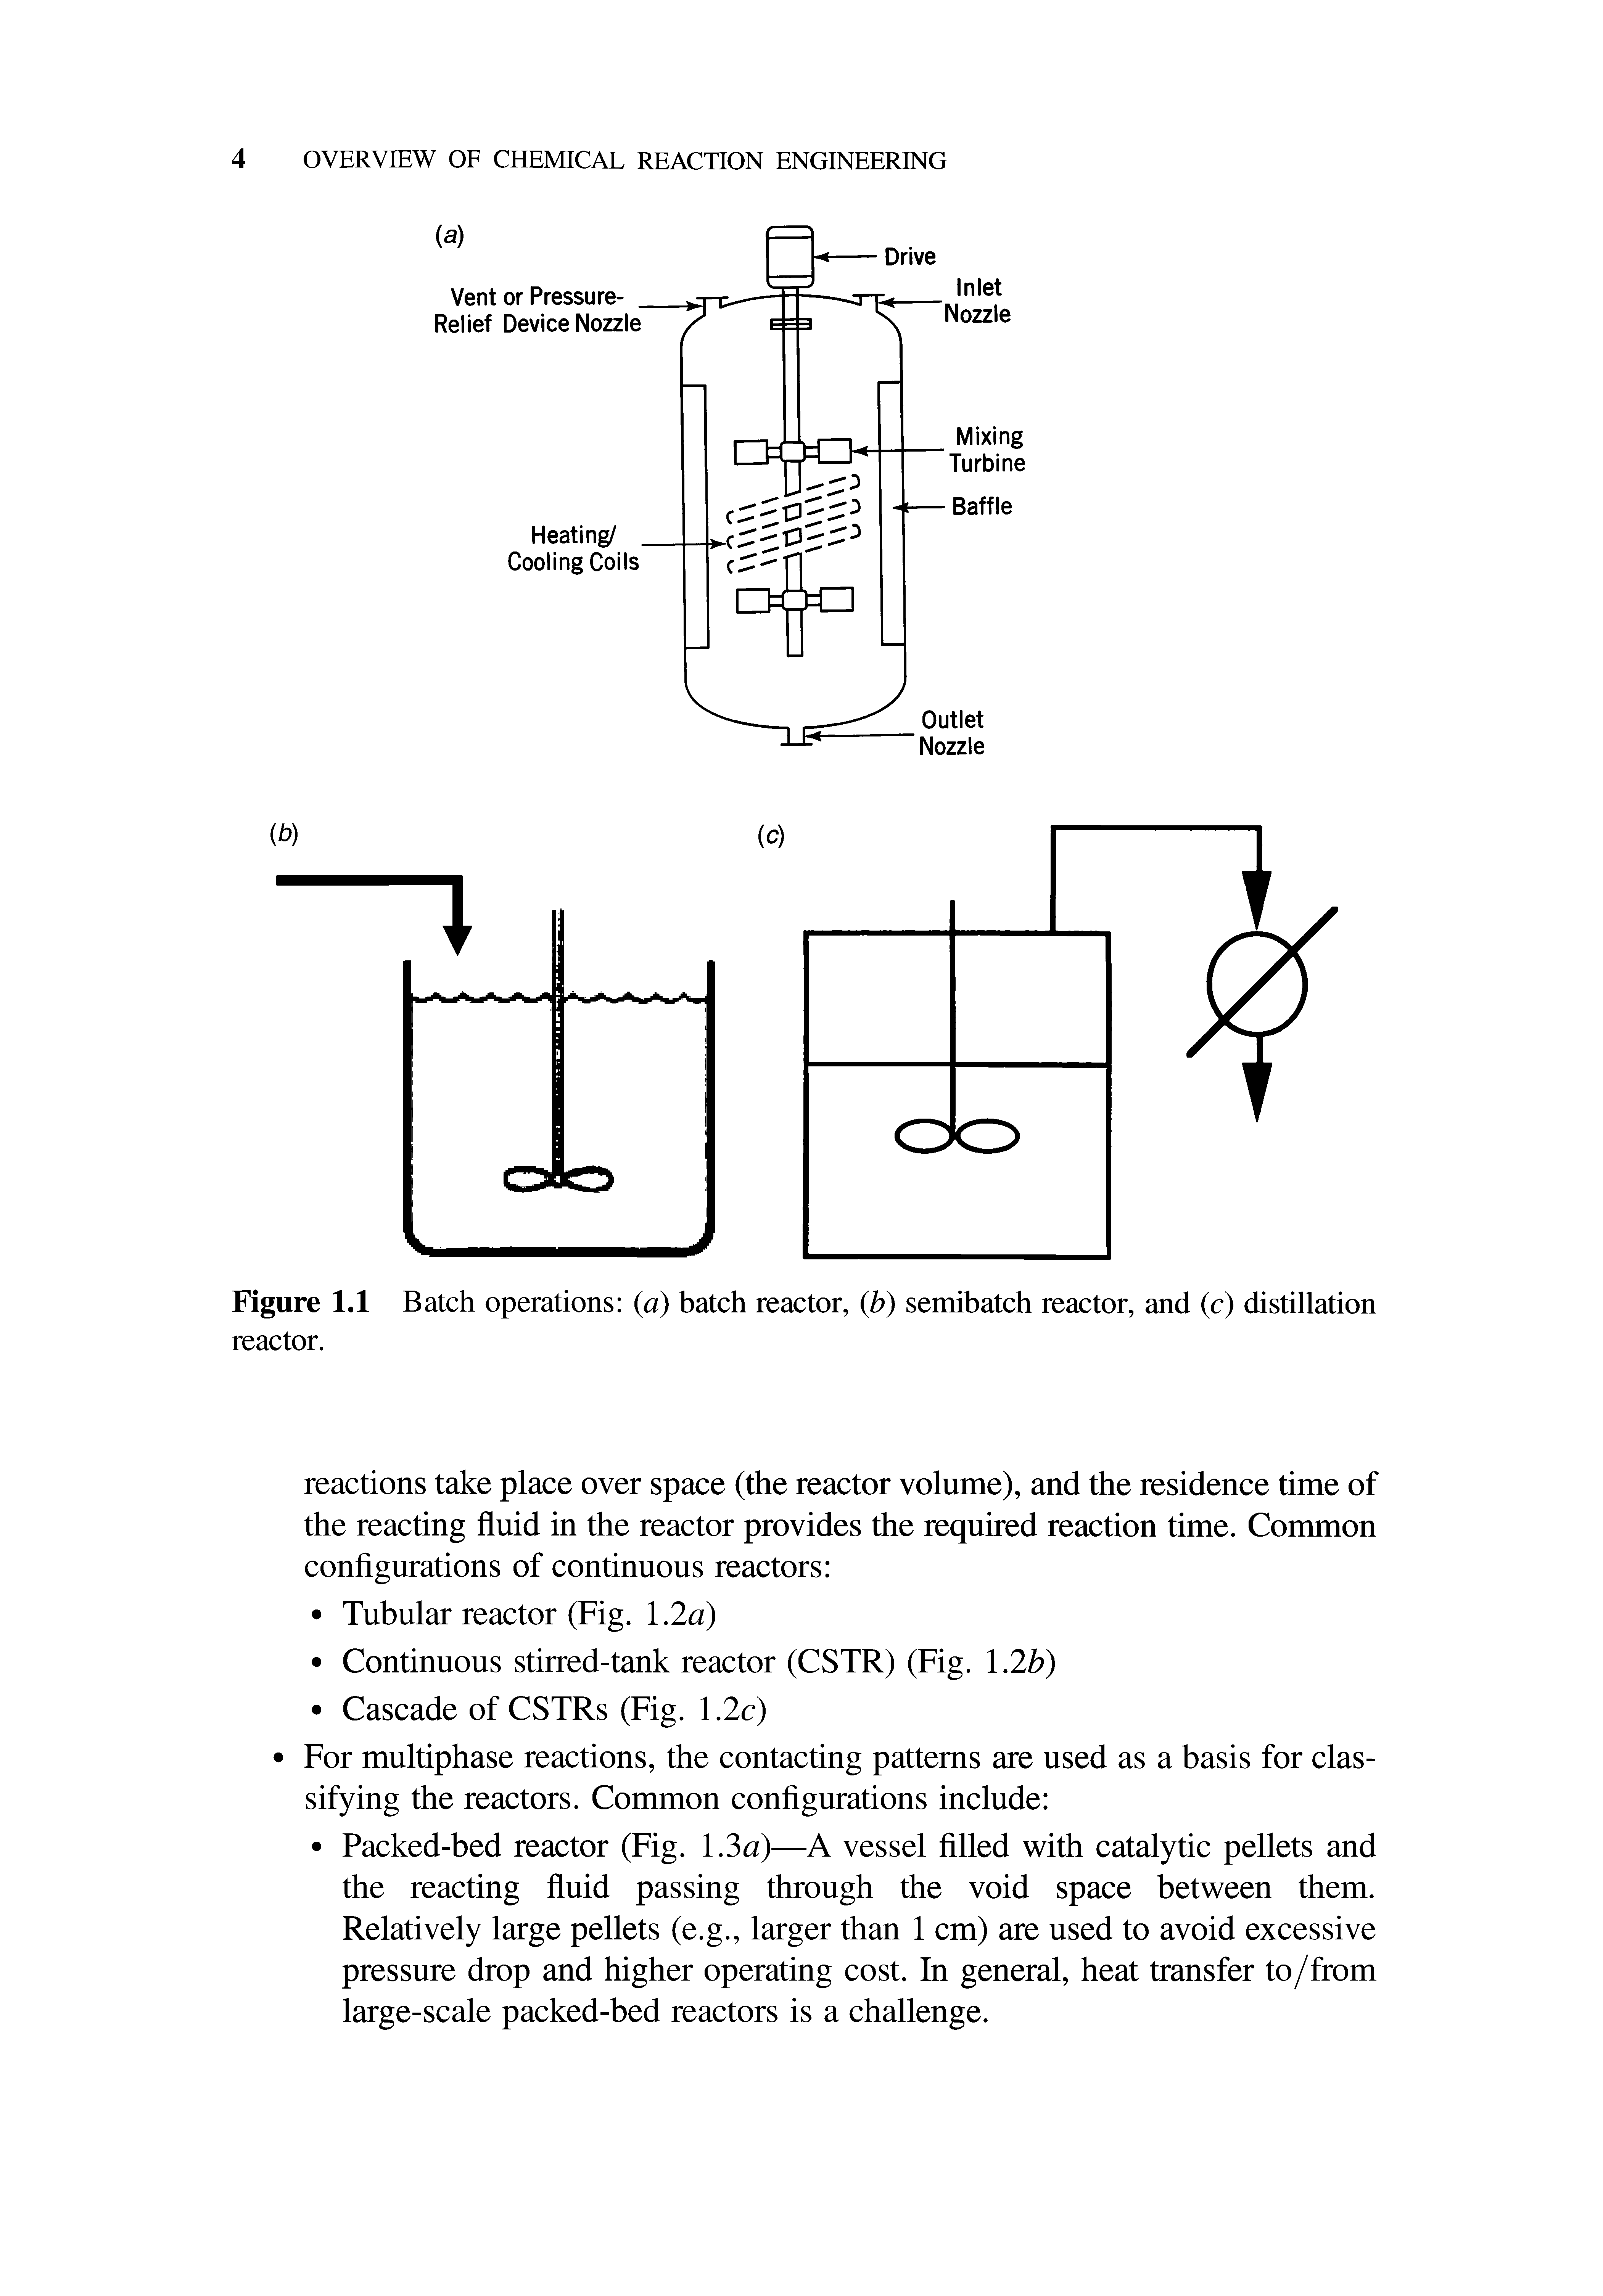 Figure 1.1 Batch operations (a) batch reactor, (b) semibatch reactor, and (c) distillation reactor.